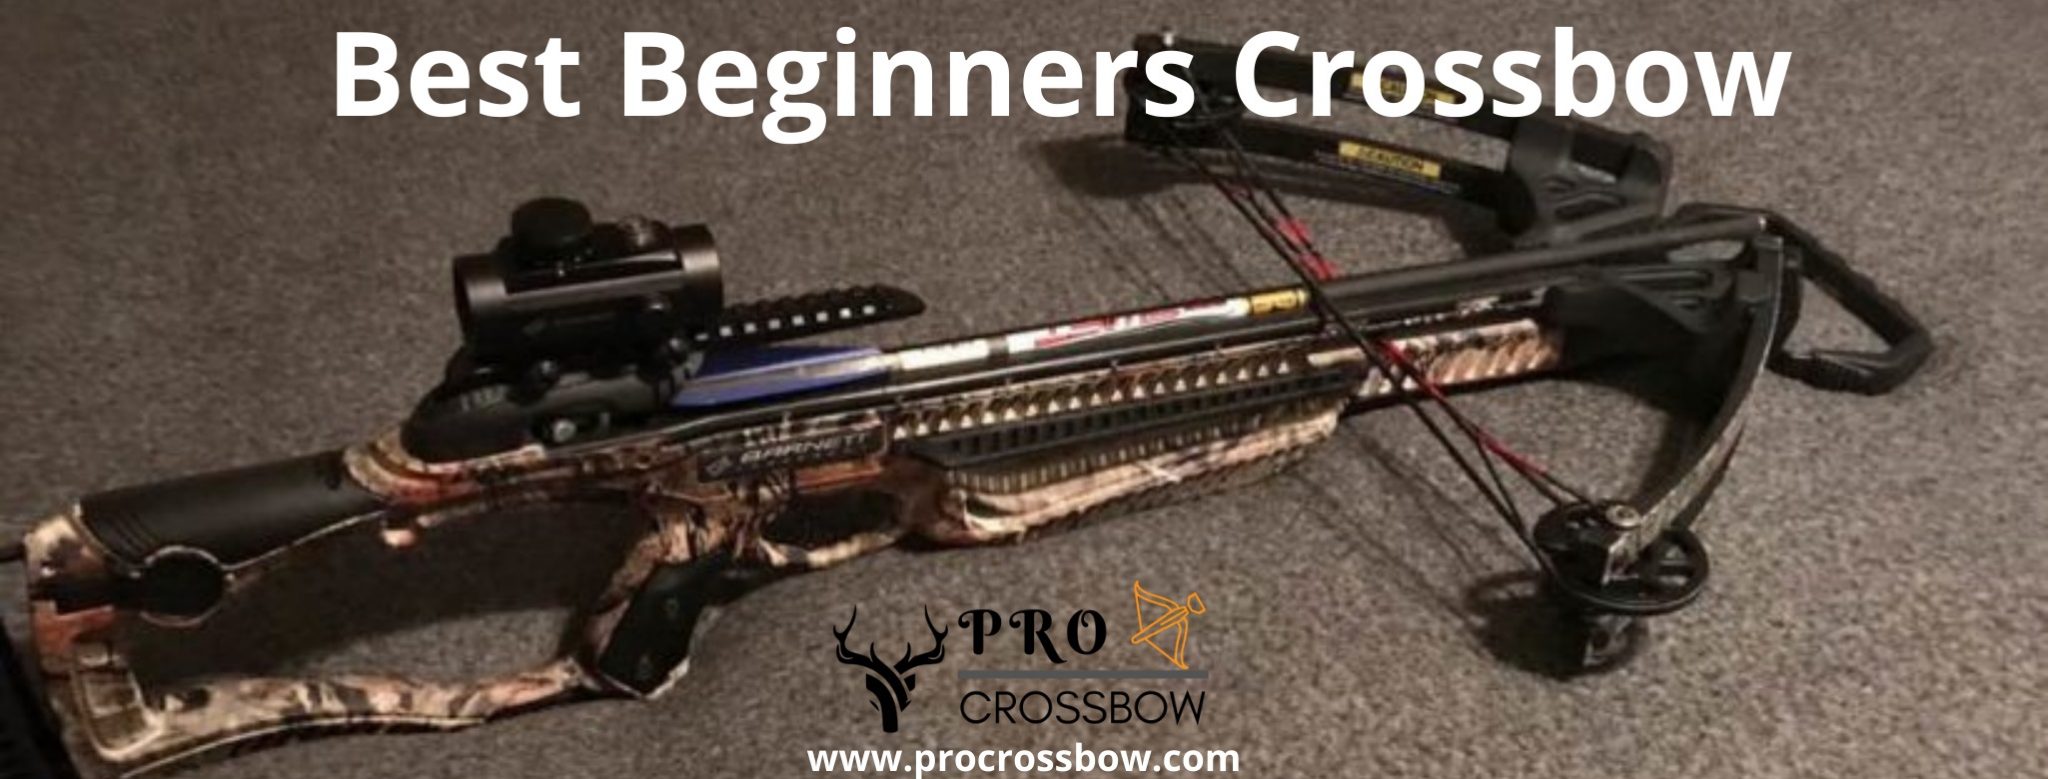 best crossbow for beginners 2021